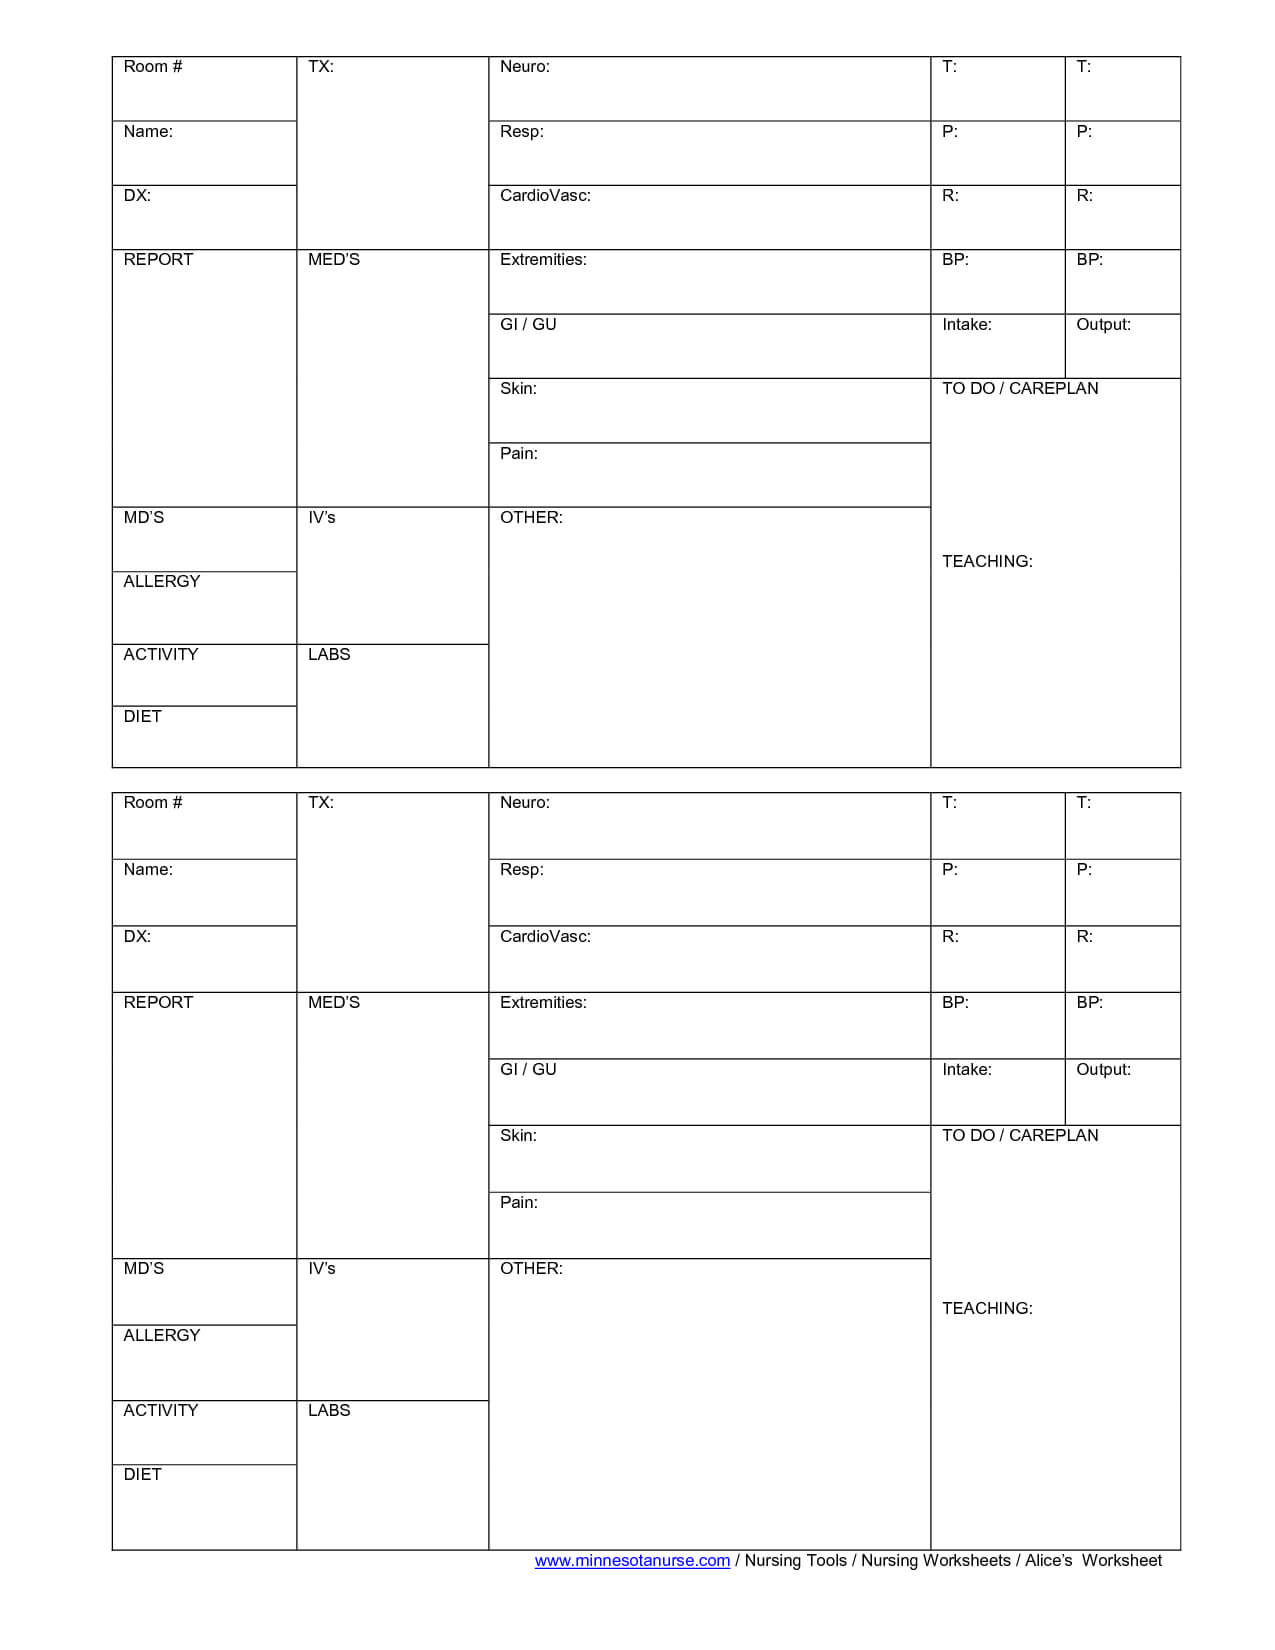 Blank Nursing Report Sheets For Newborns | Nursing Patient Inside Nursing Report Sheet Template